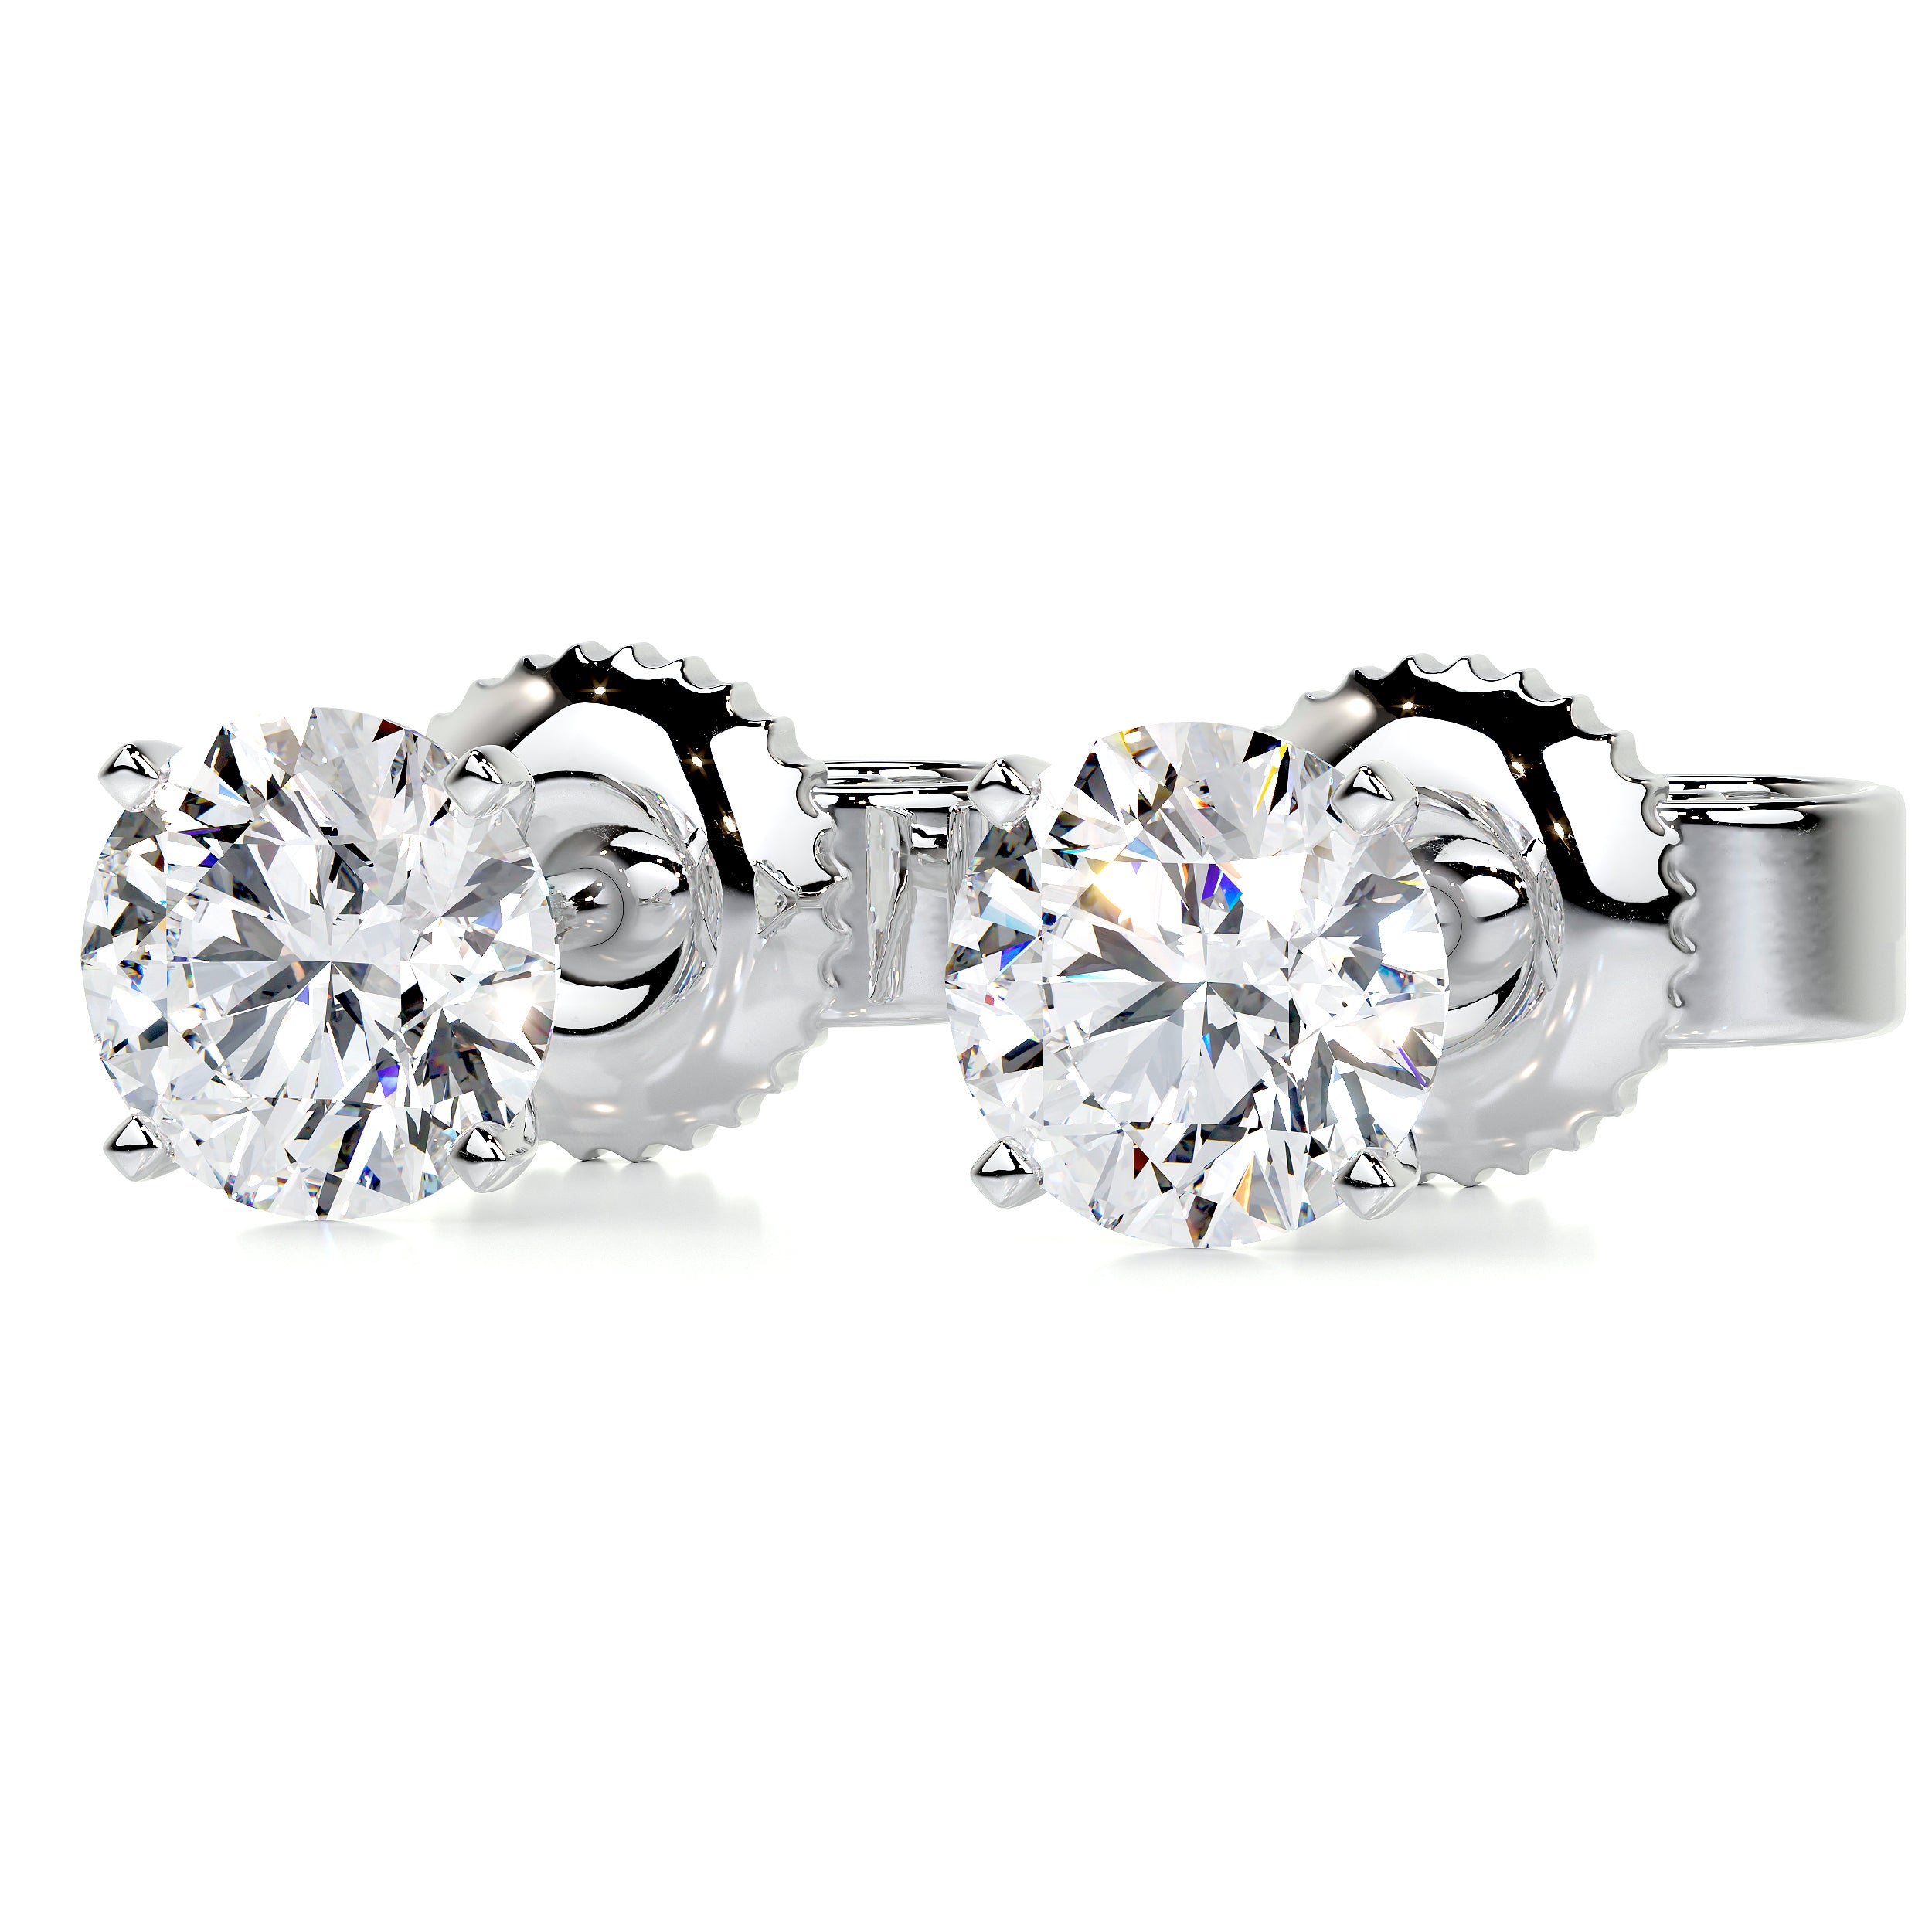 Allen Diamond Earrings   (3 Carat) -18K White Gold